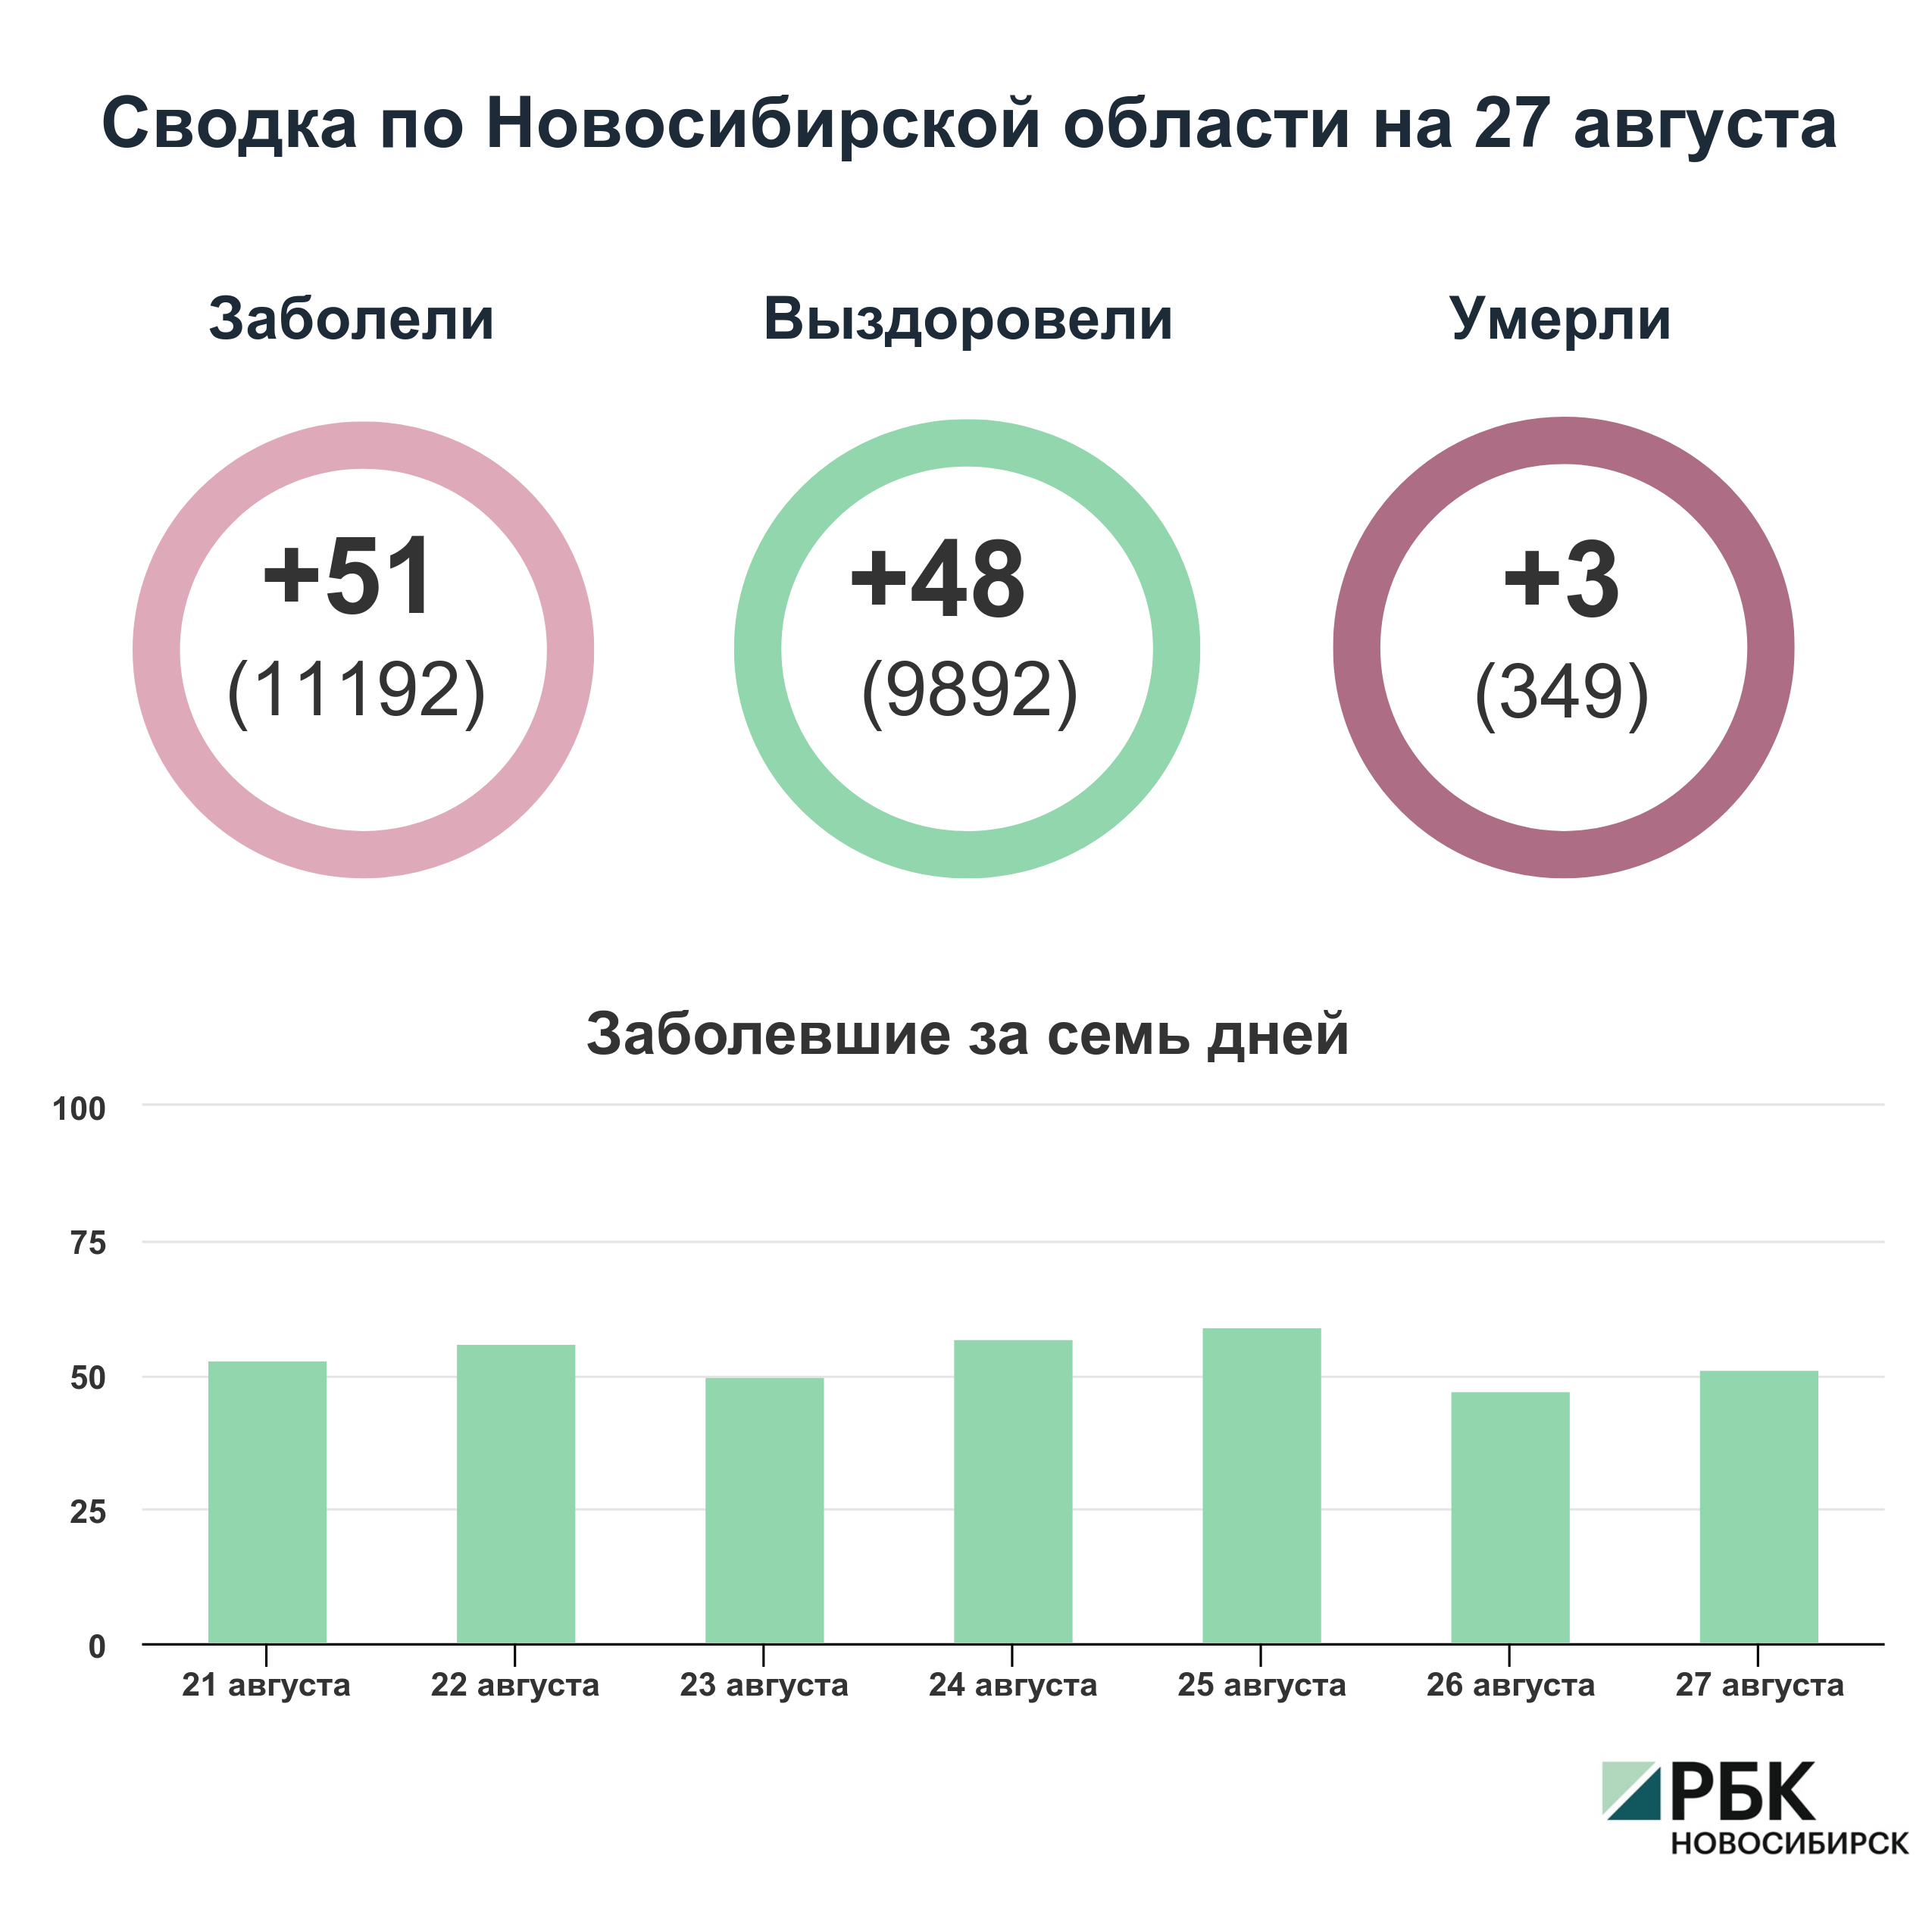 Коронавирус в Новосибирске: сводка на 27 августа